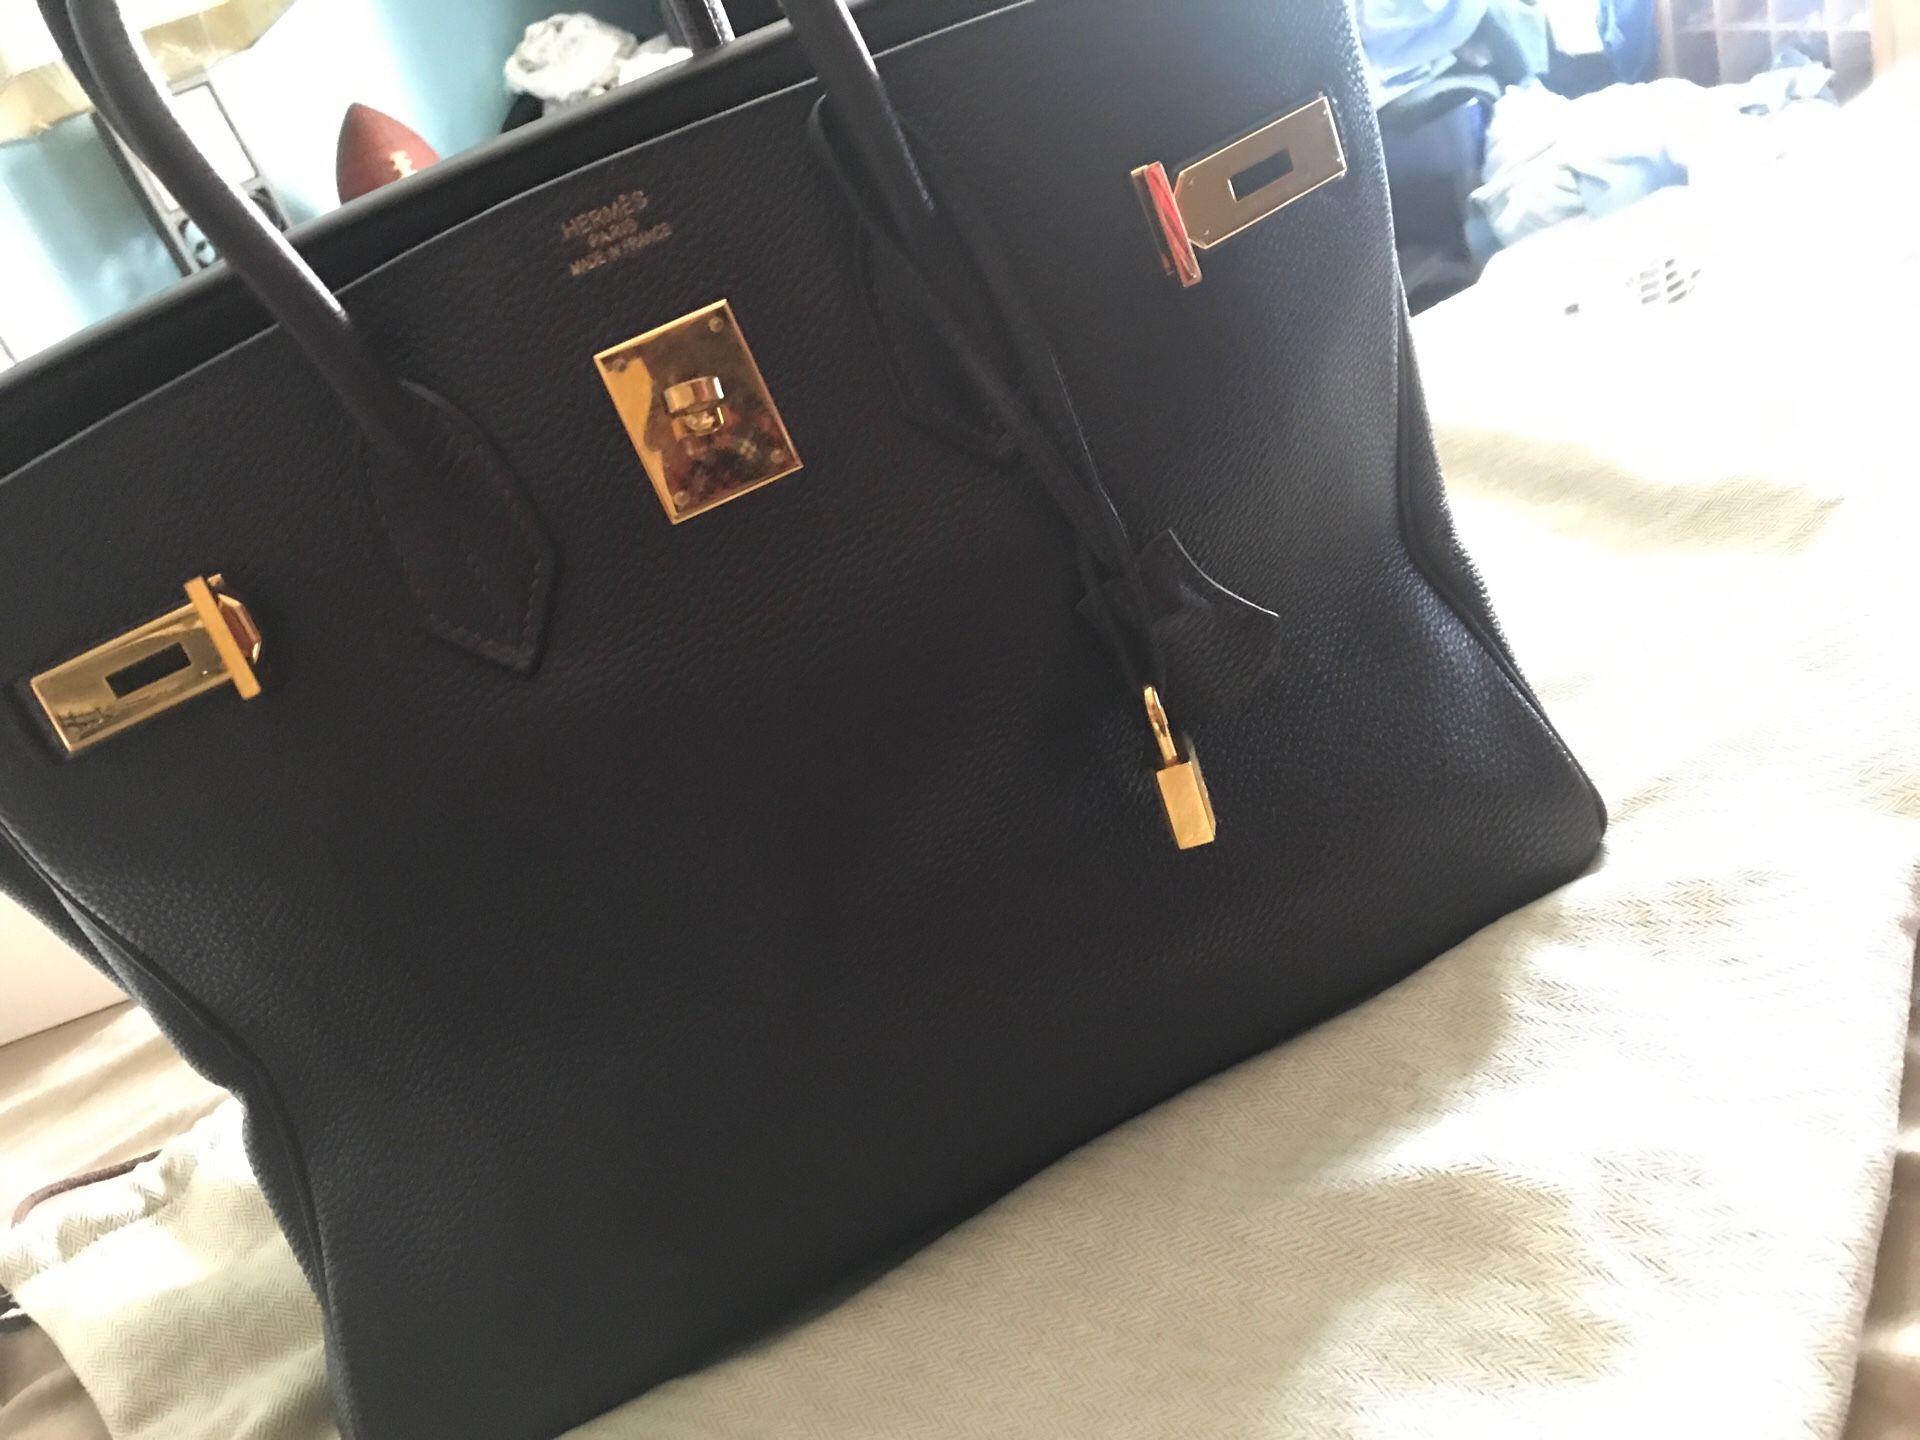 Authentic Hermès Birkin Bag !! VOGUE stylist